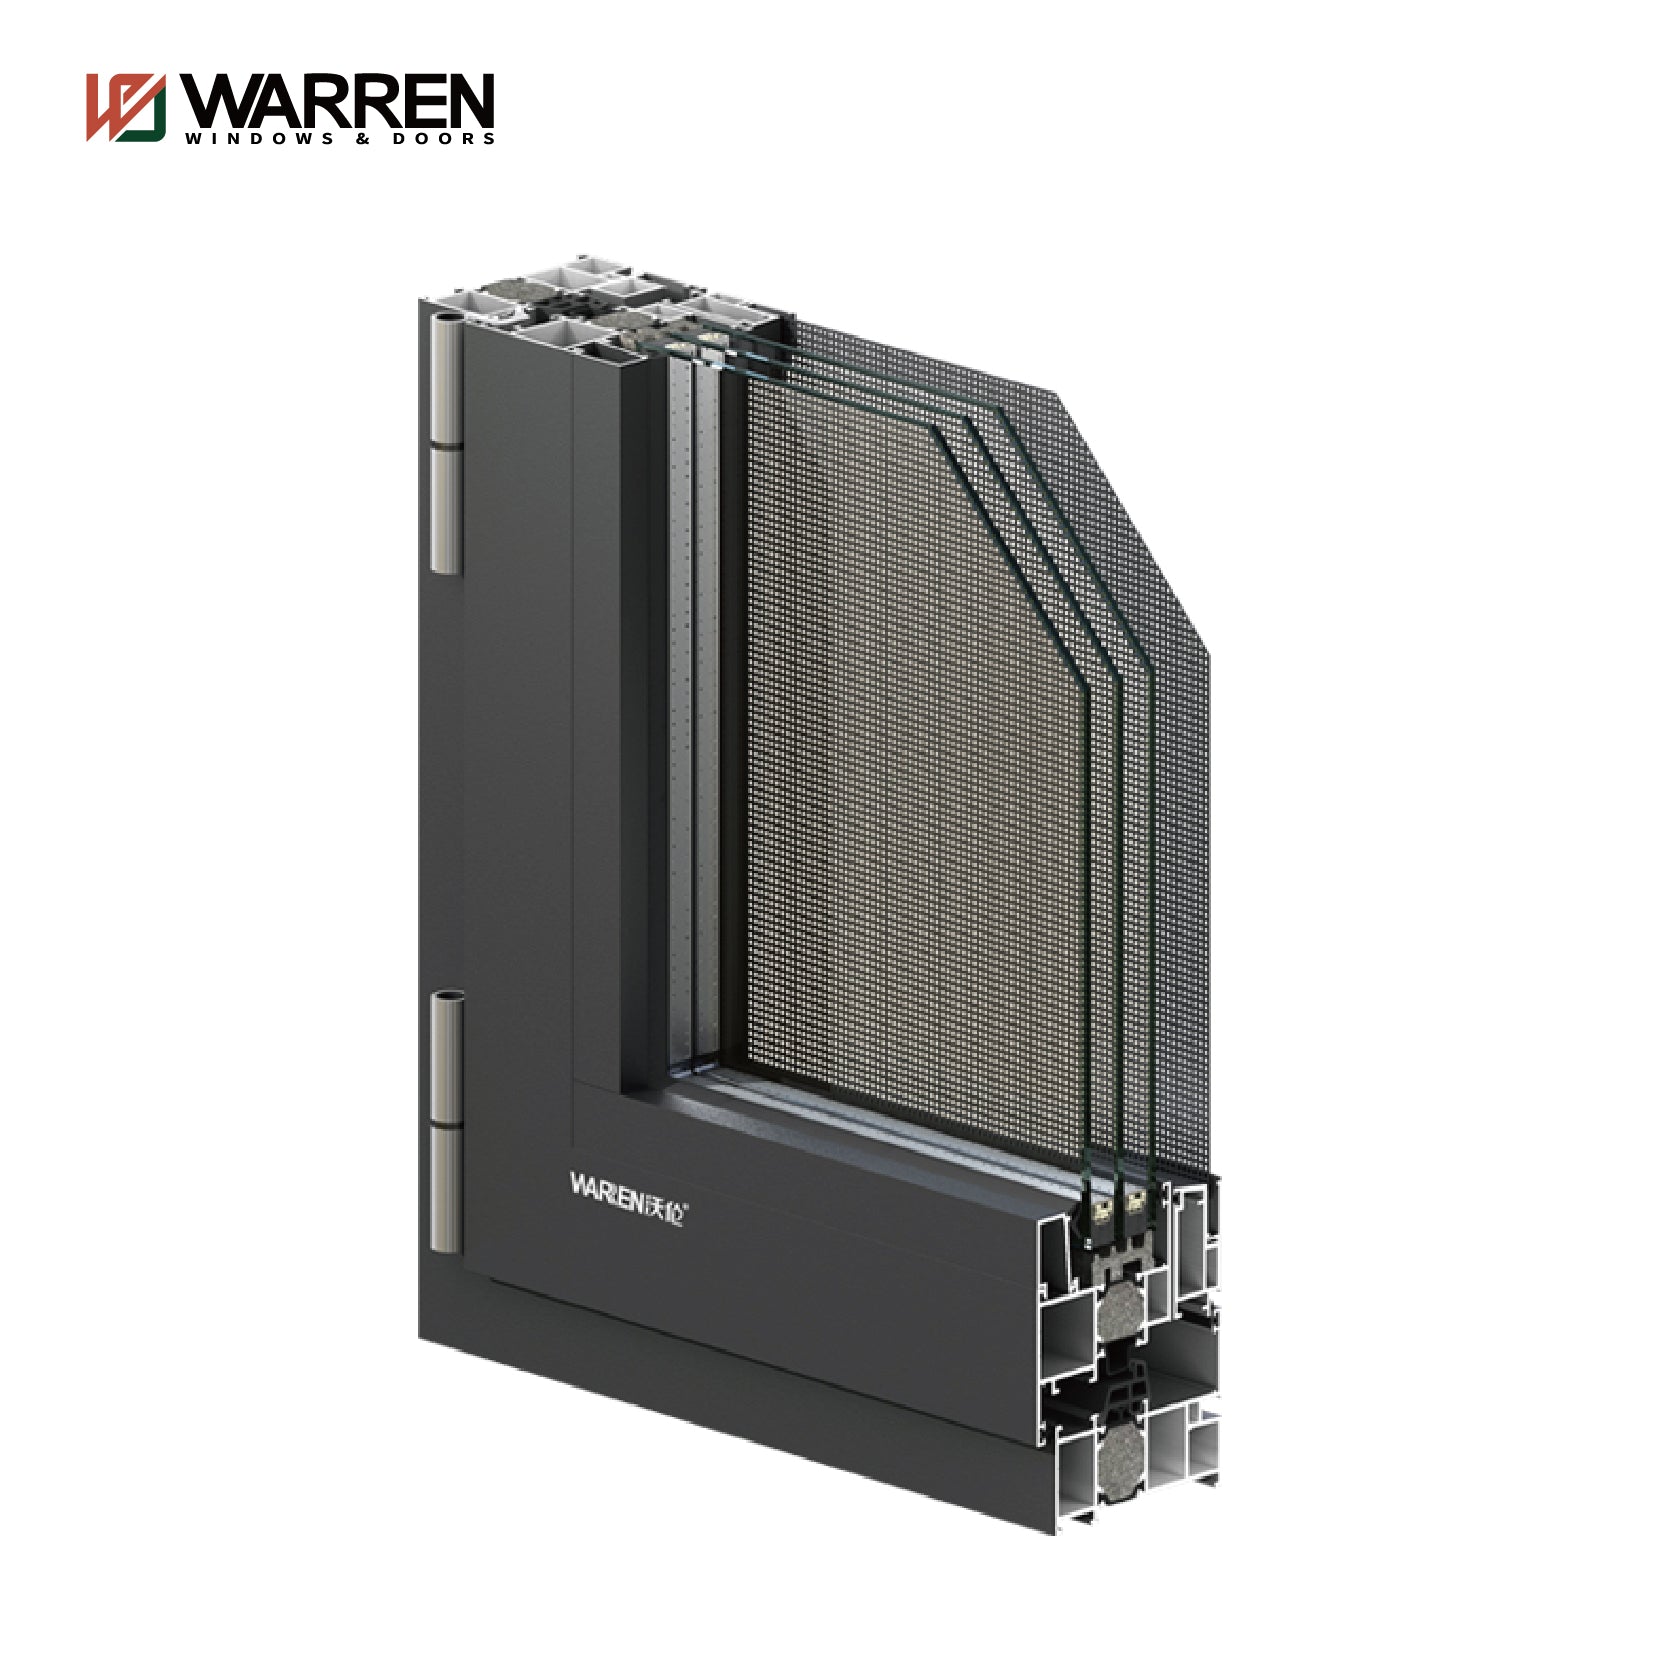 Warren High Quality Custom Wholesale Windows California Standard Aluminum Windows With Mosquito Screen